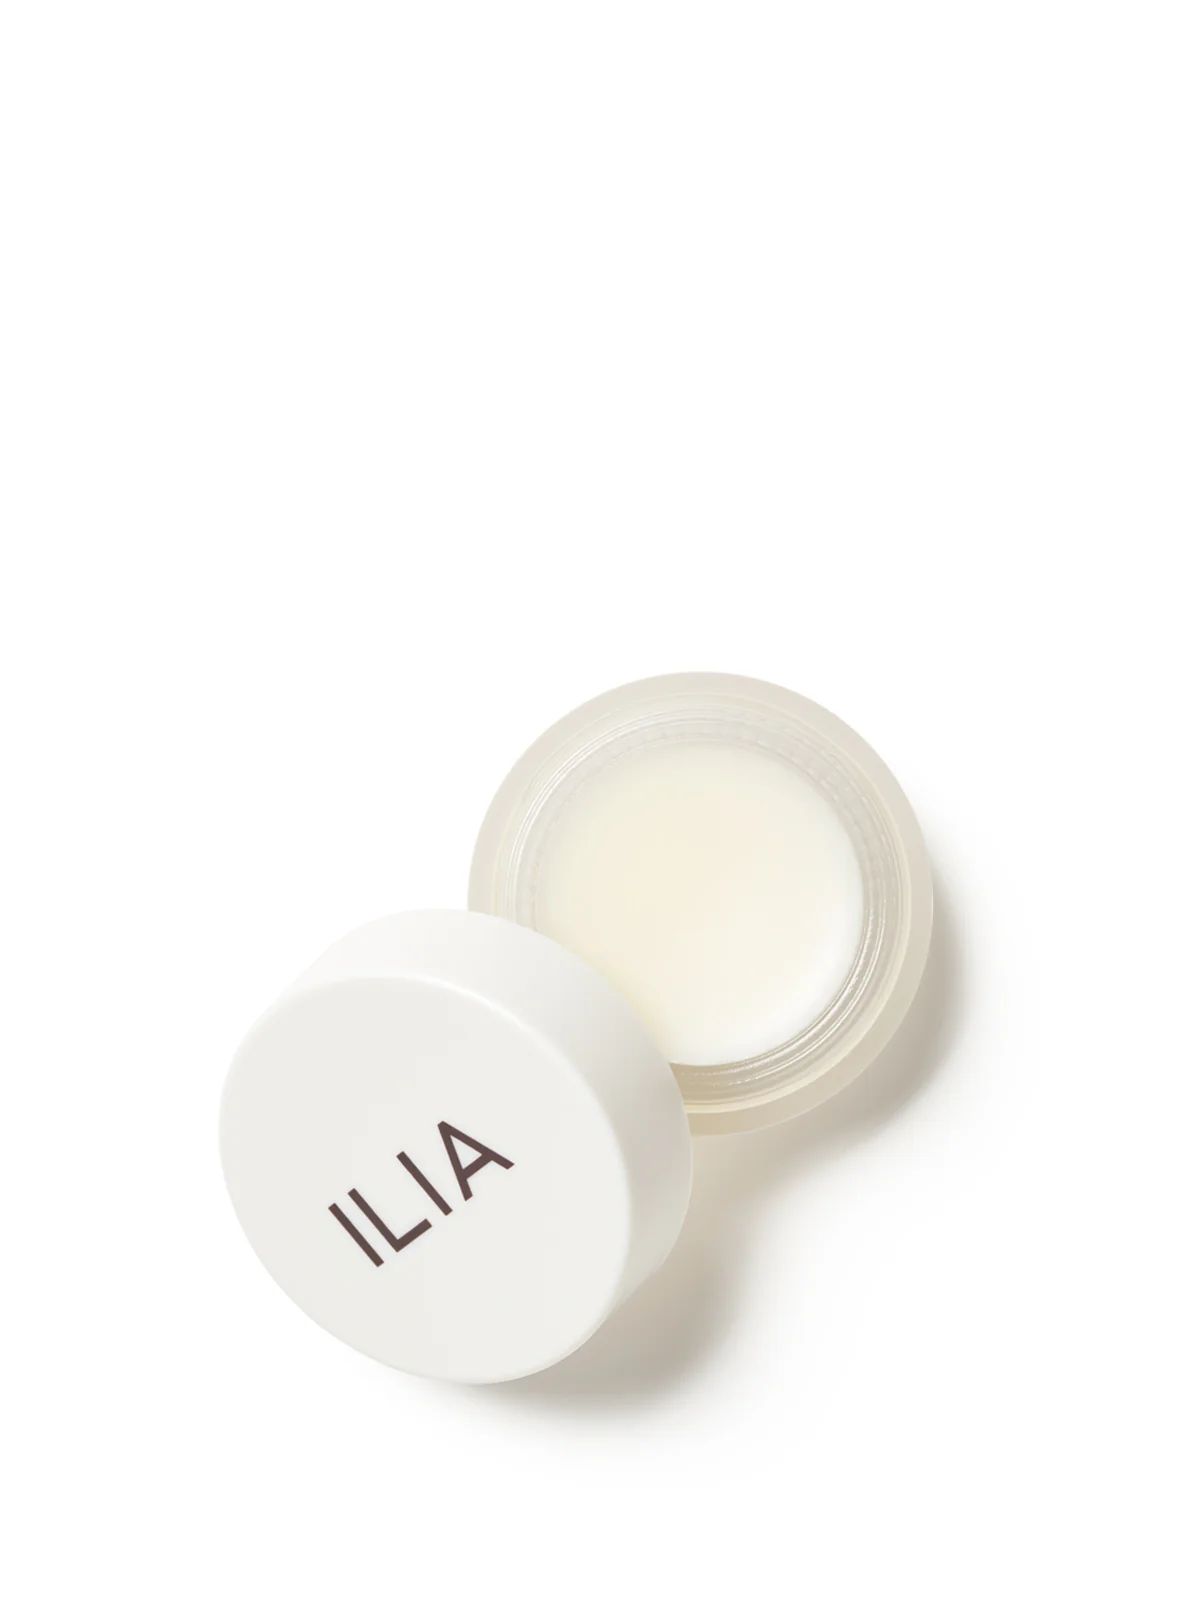 ILIA Lip Wrap Hydrating Mask - Lip Wrap Hydrating Mask | ILIA Beauty